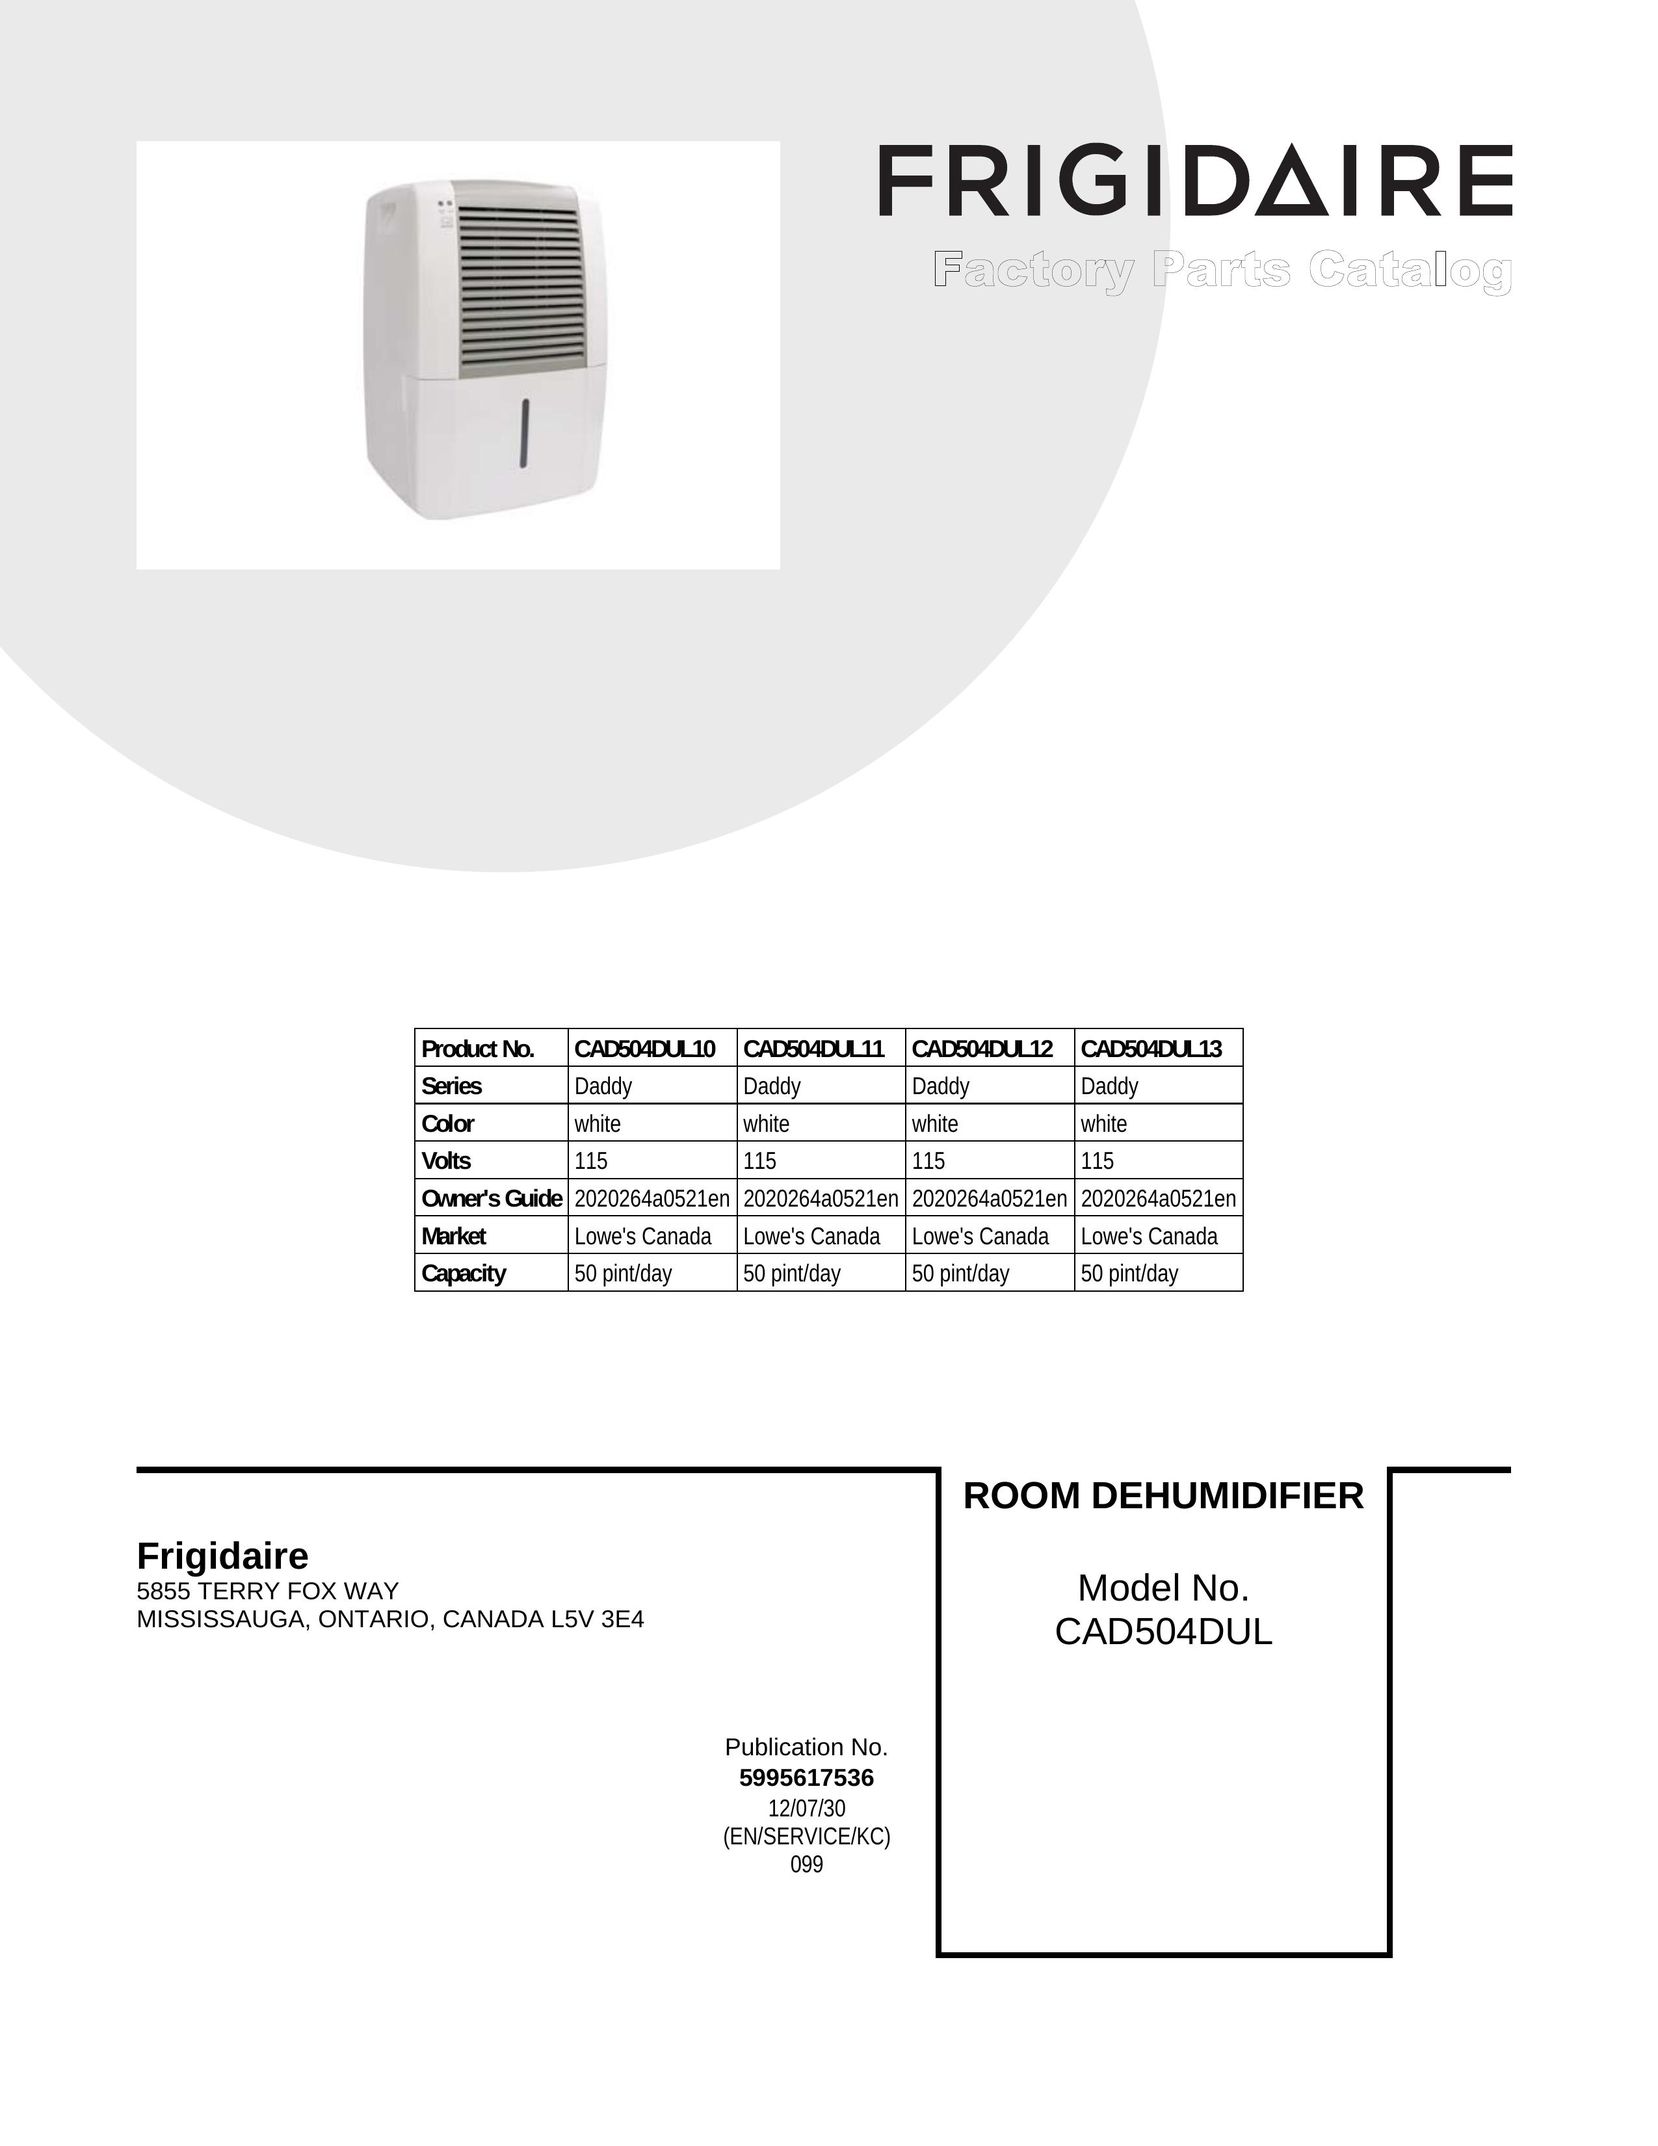 Frigidaire CAD504DUL10 Dehumidifier User Manual